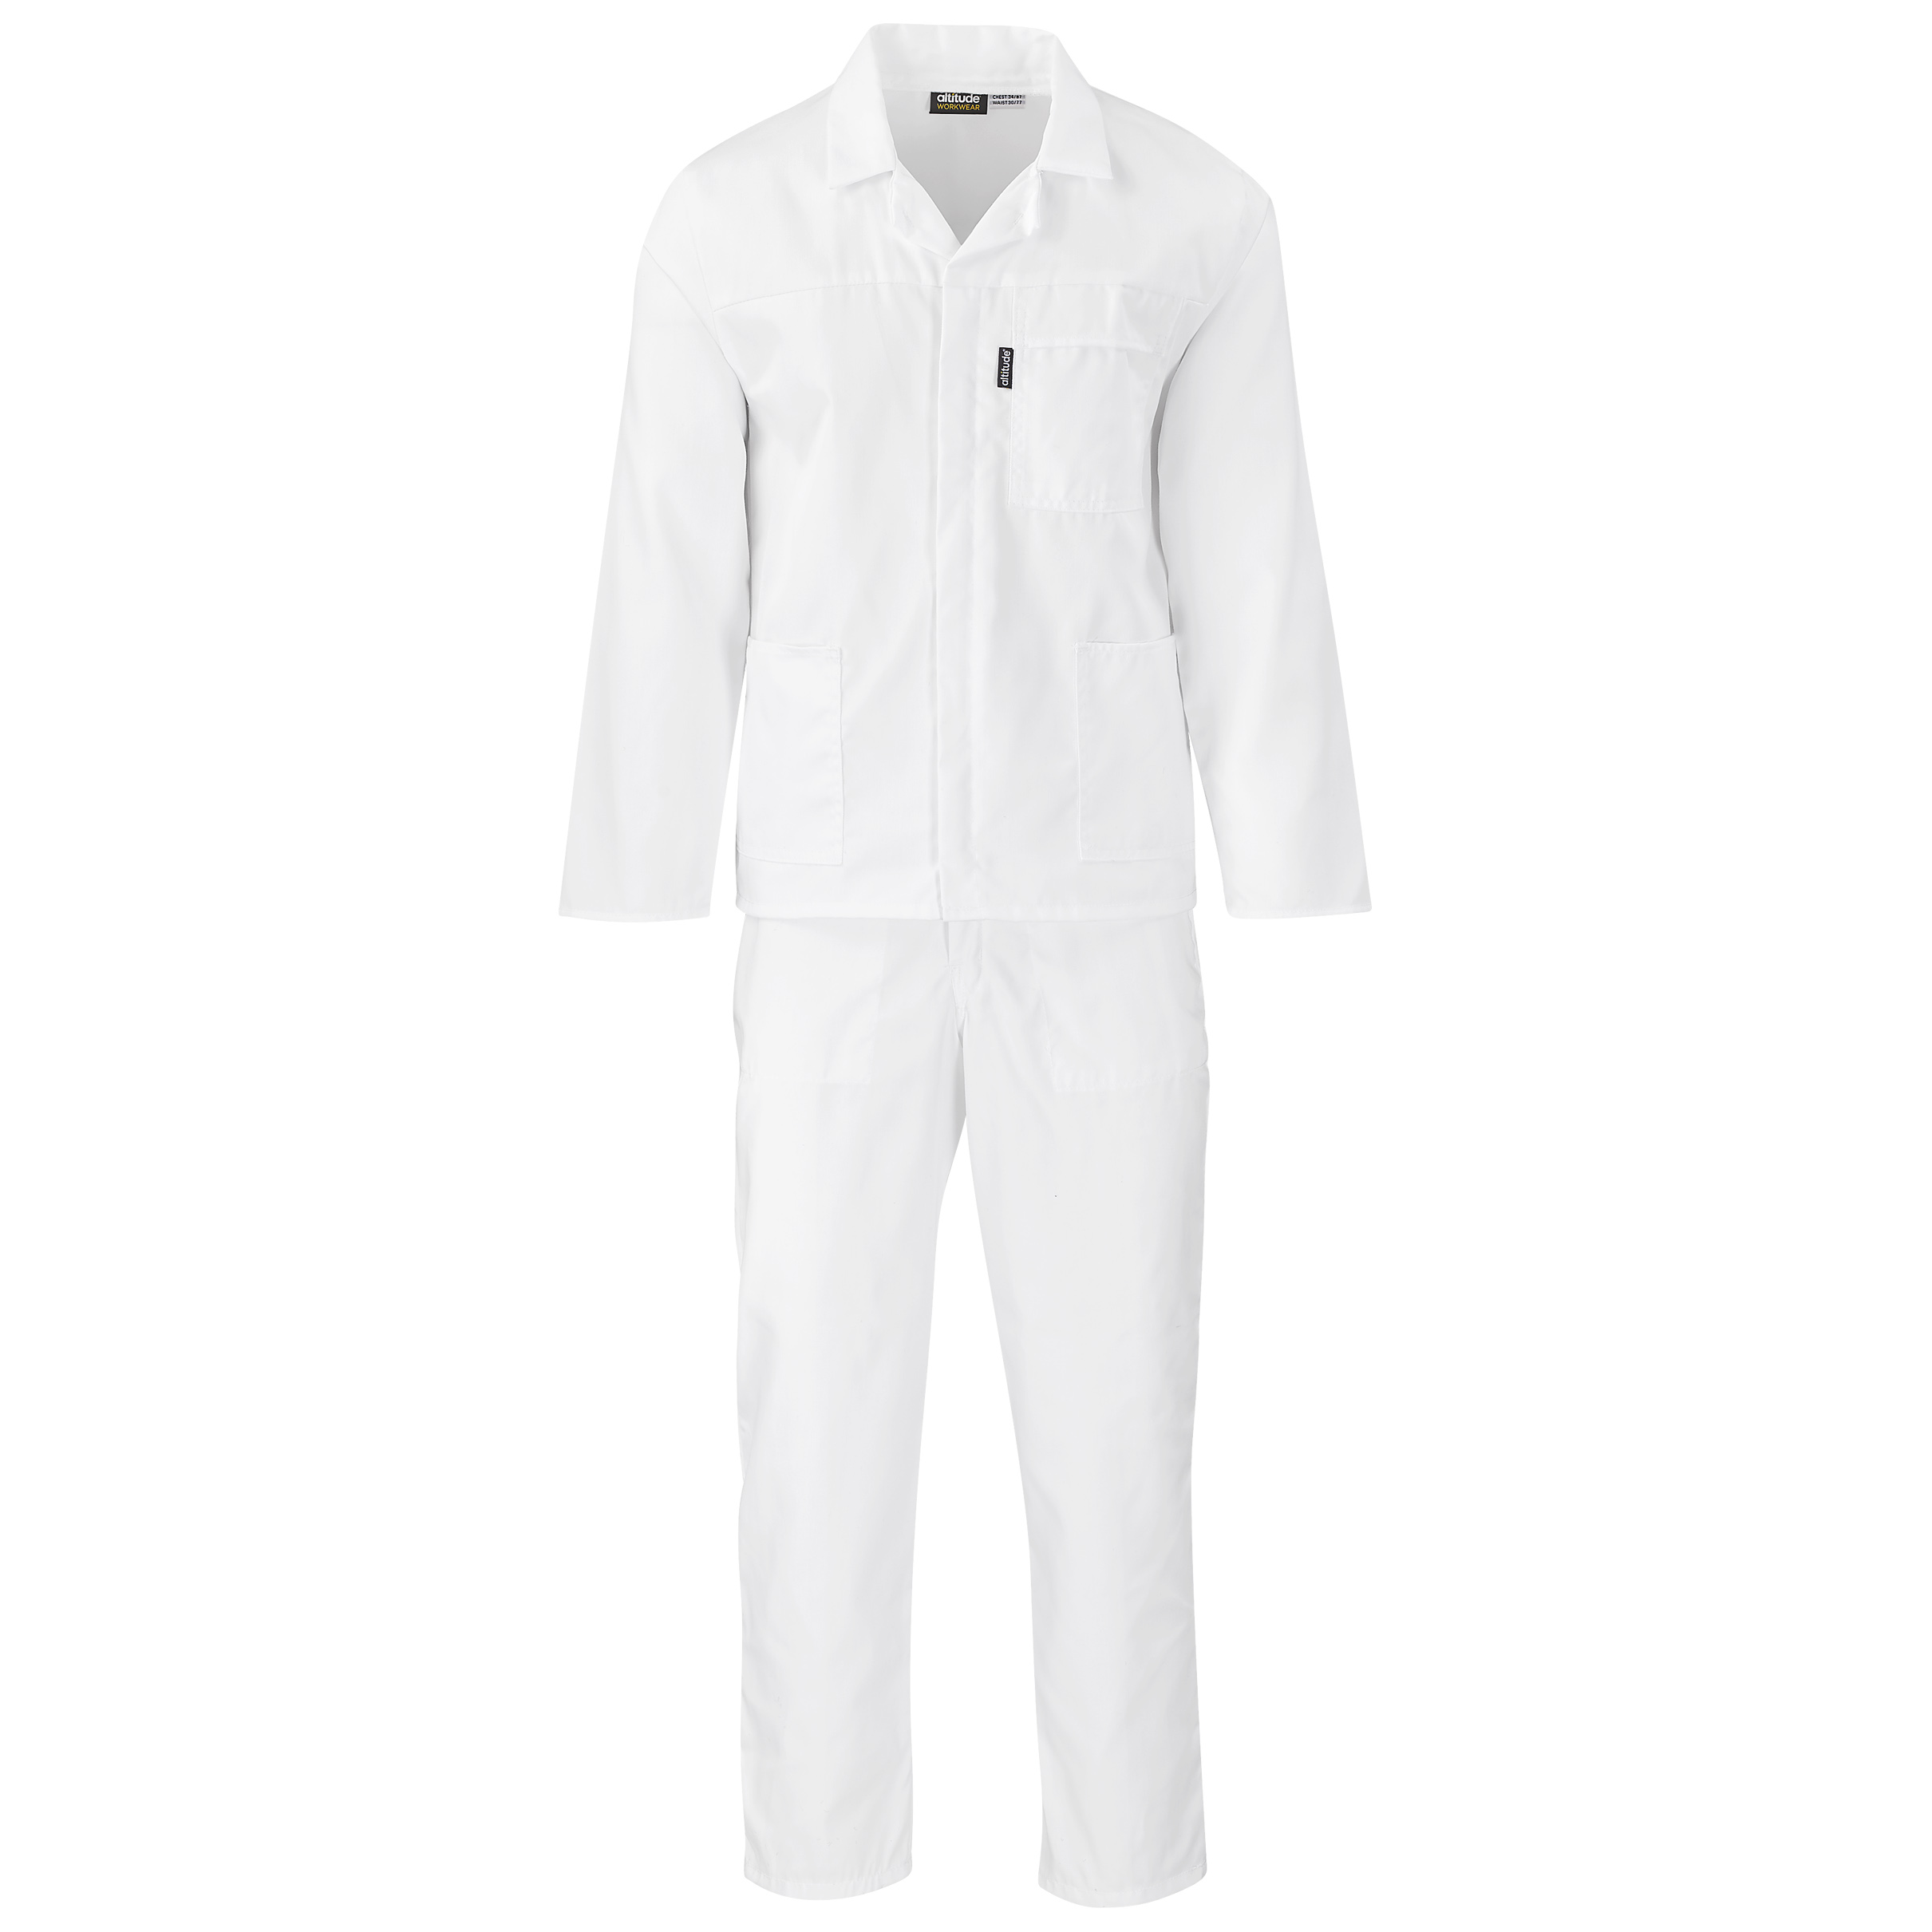 Trade Polycotton Conti Suit white ALT-1101-W_default by brandxellence workwear